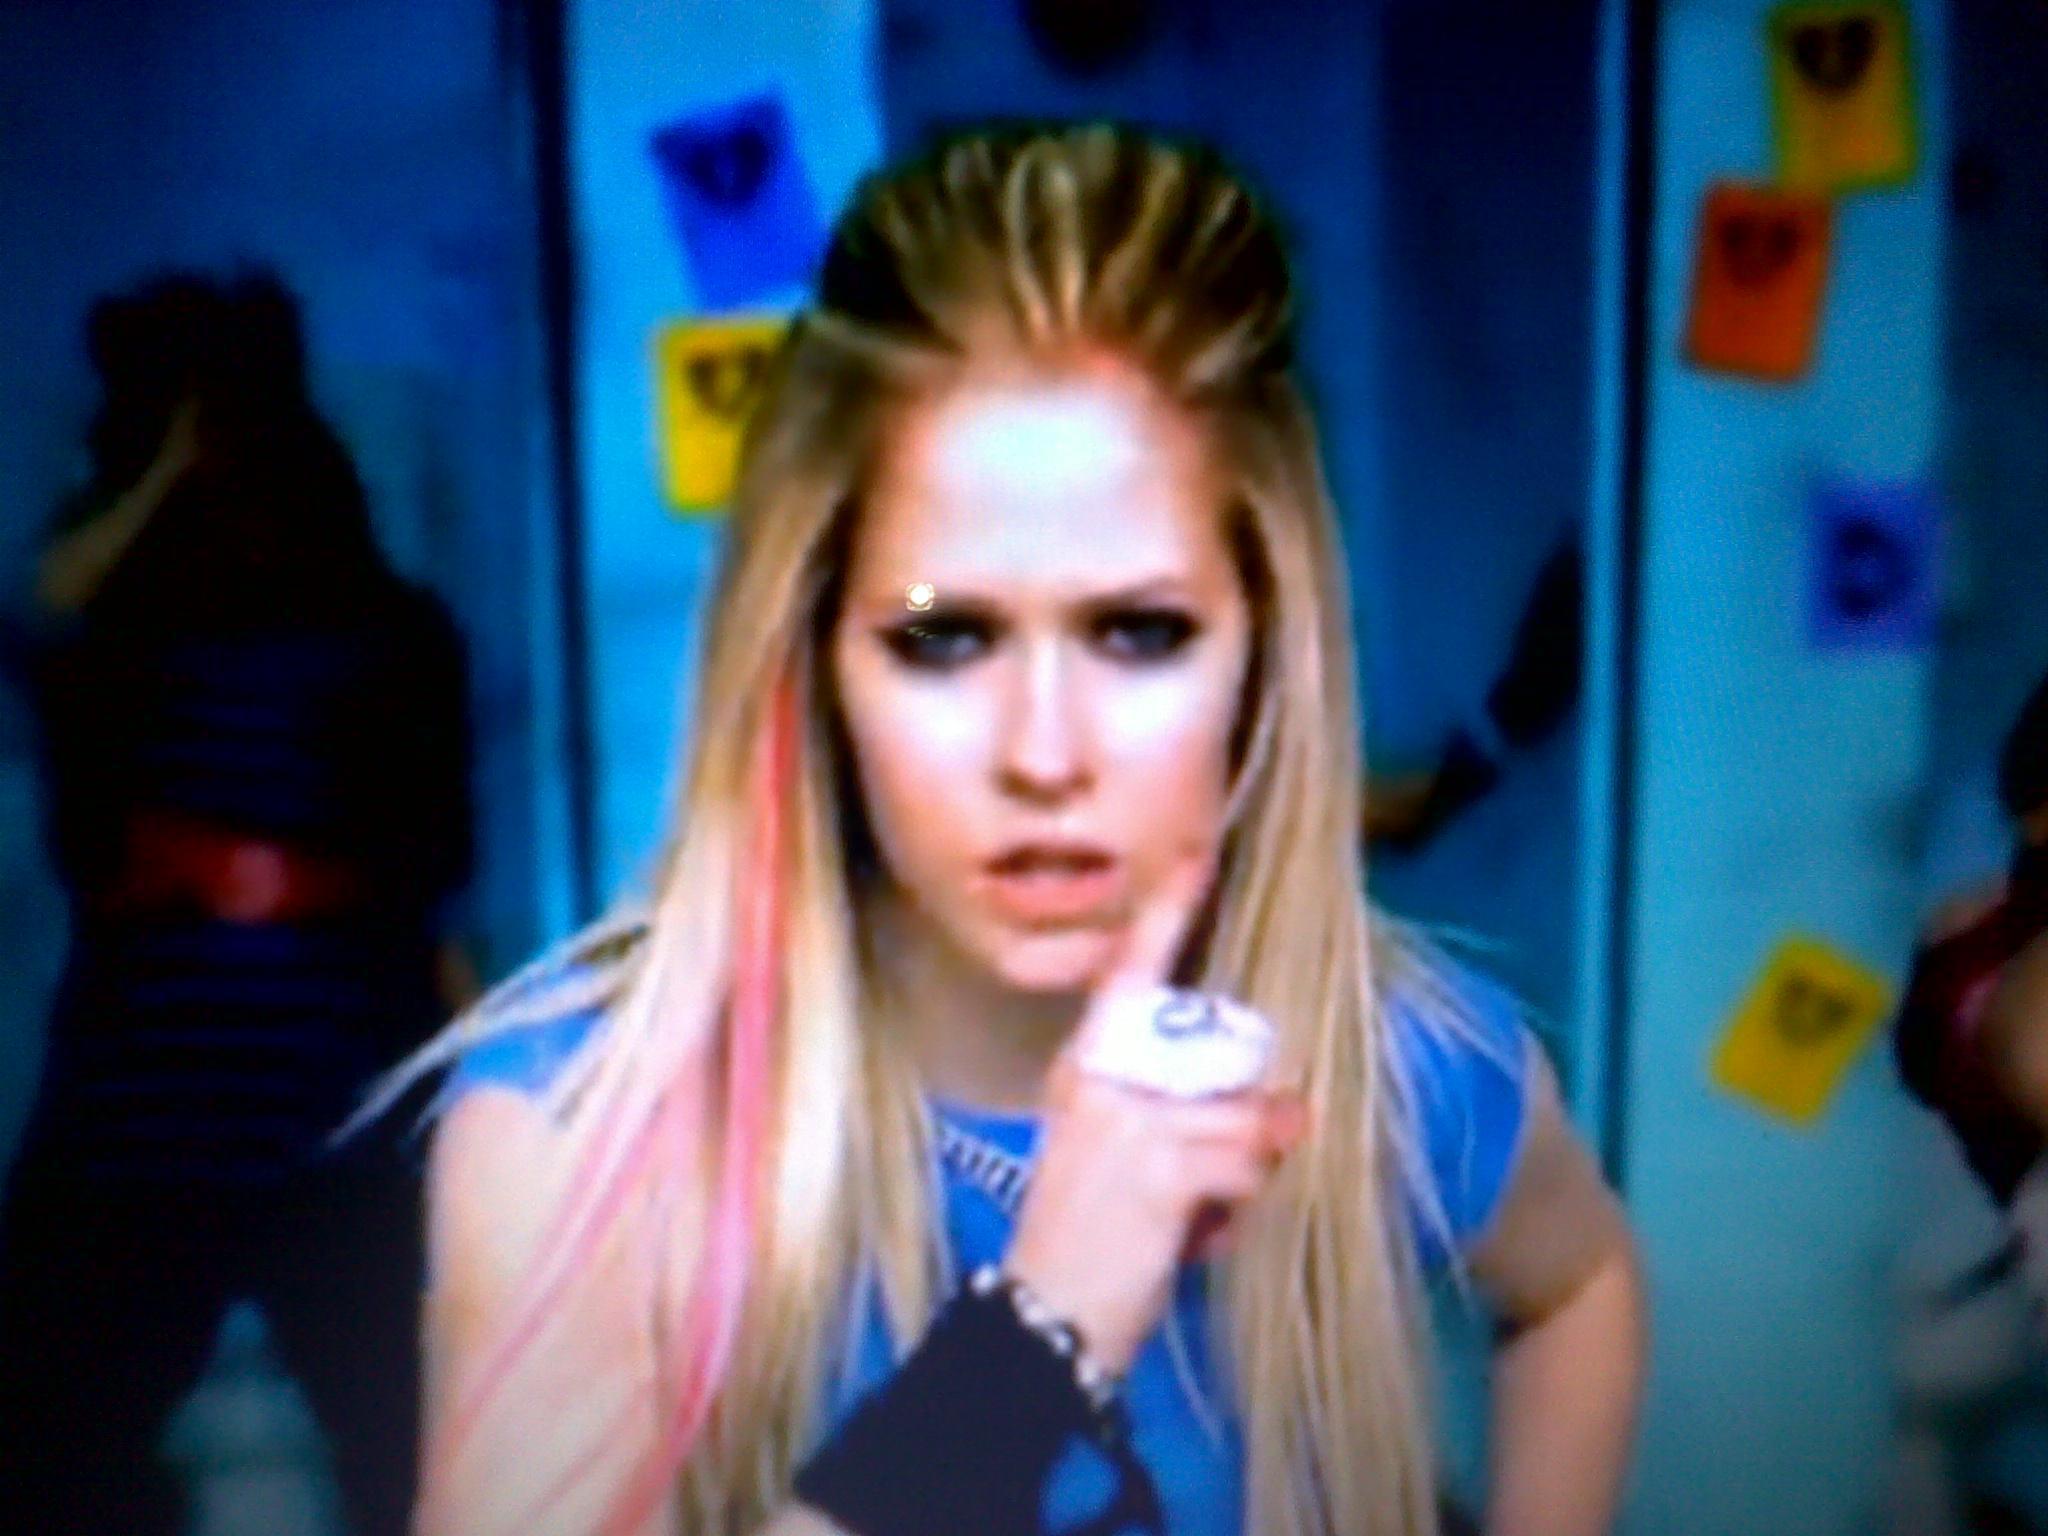 Music video - Girlfriend - Avril Lavigne Image (16184463) - Fanpop